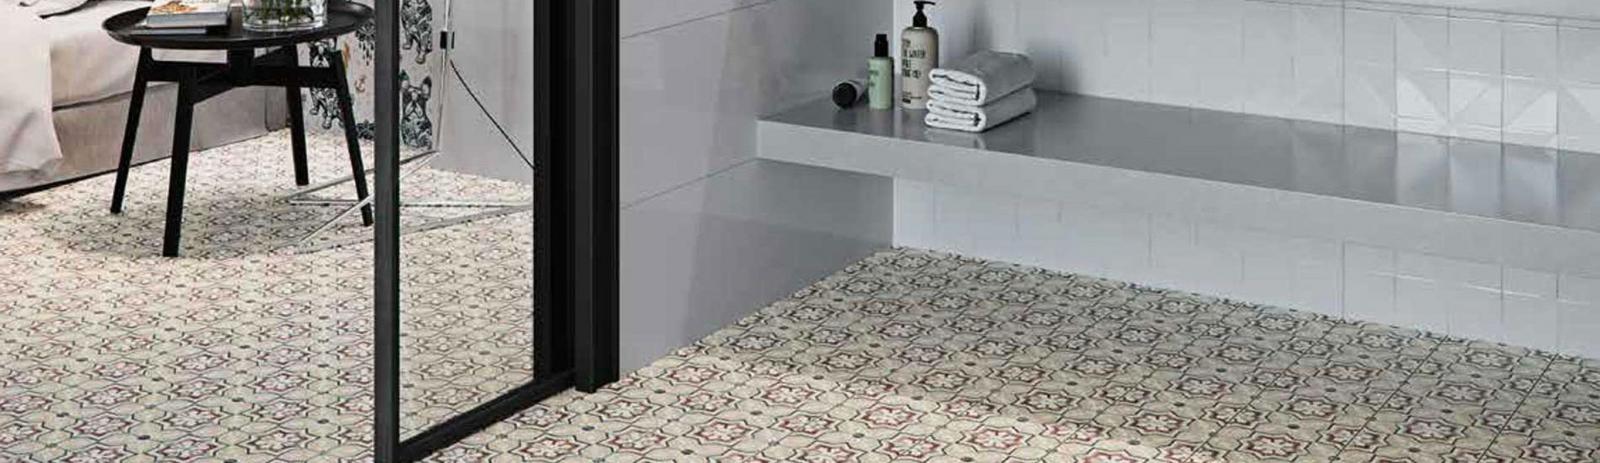 banner-sao-luis-cement-deco-pattern-look-tile-spanish-aparici-apavisa-1900x550